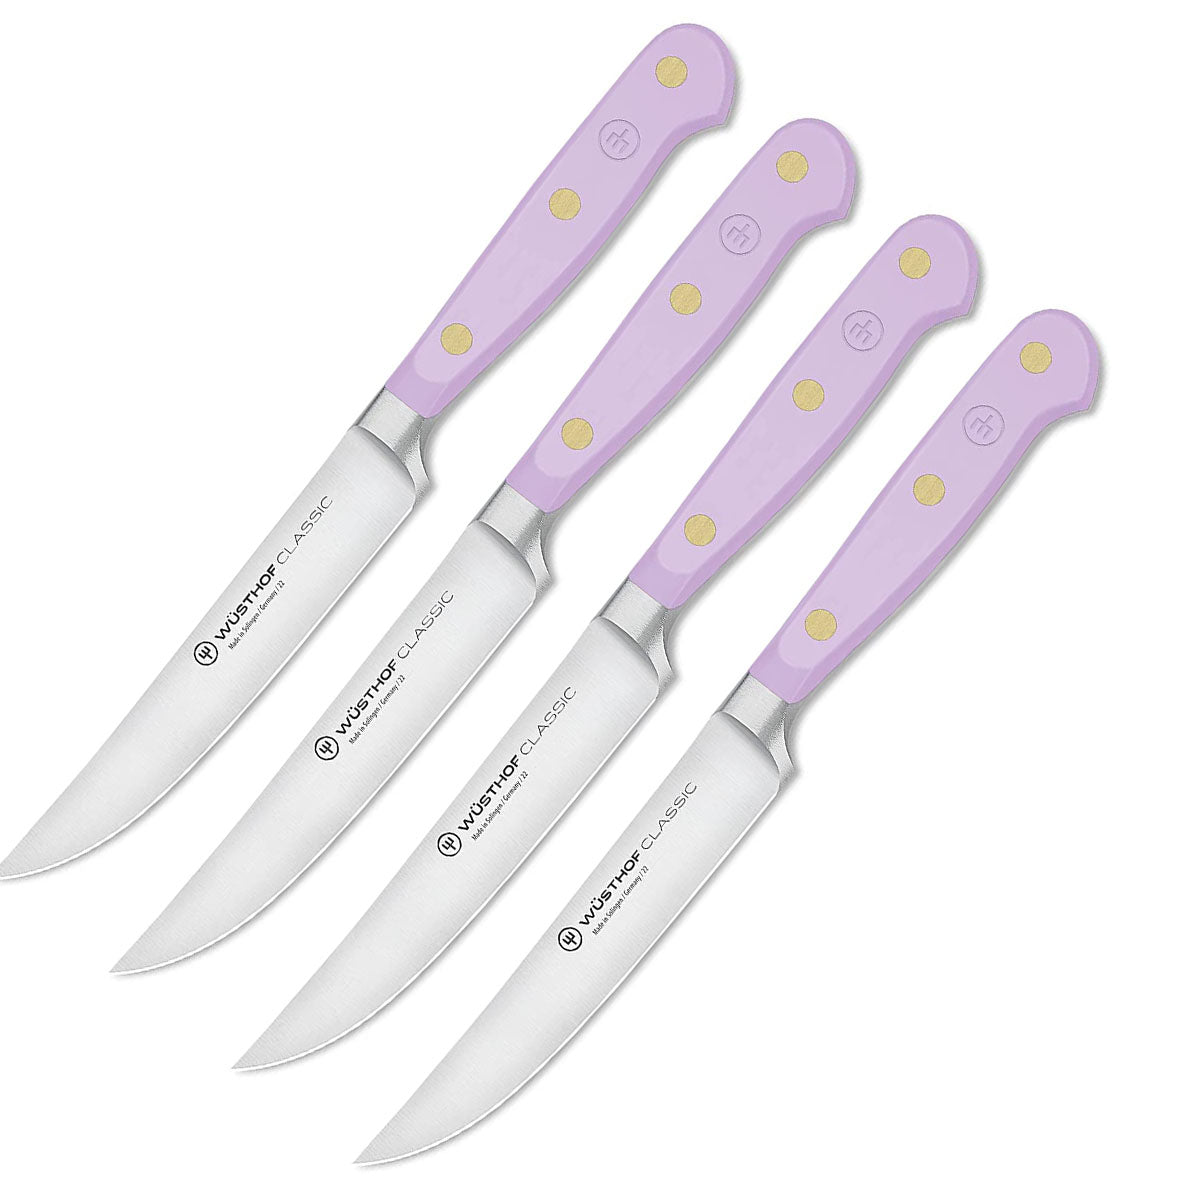 Wusthof Classic 4-Piece Steak Knife Set - Purple Yam